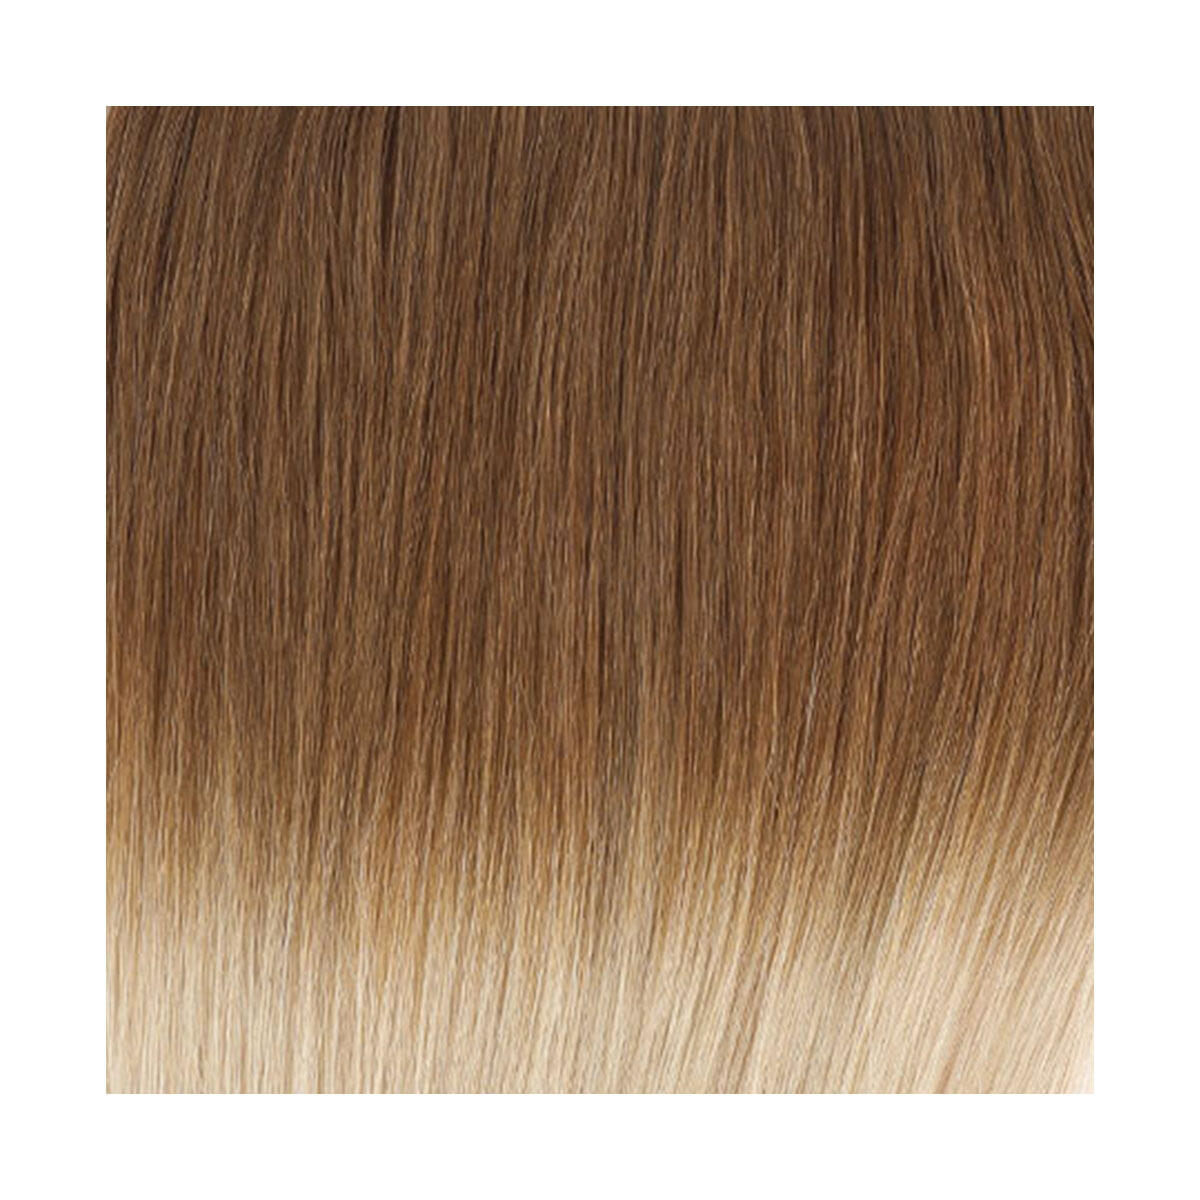 Colour Sample O5.1/10.8 Medium Ash Blond Ombre